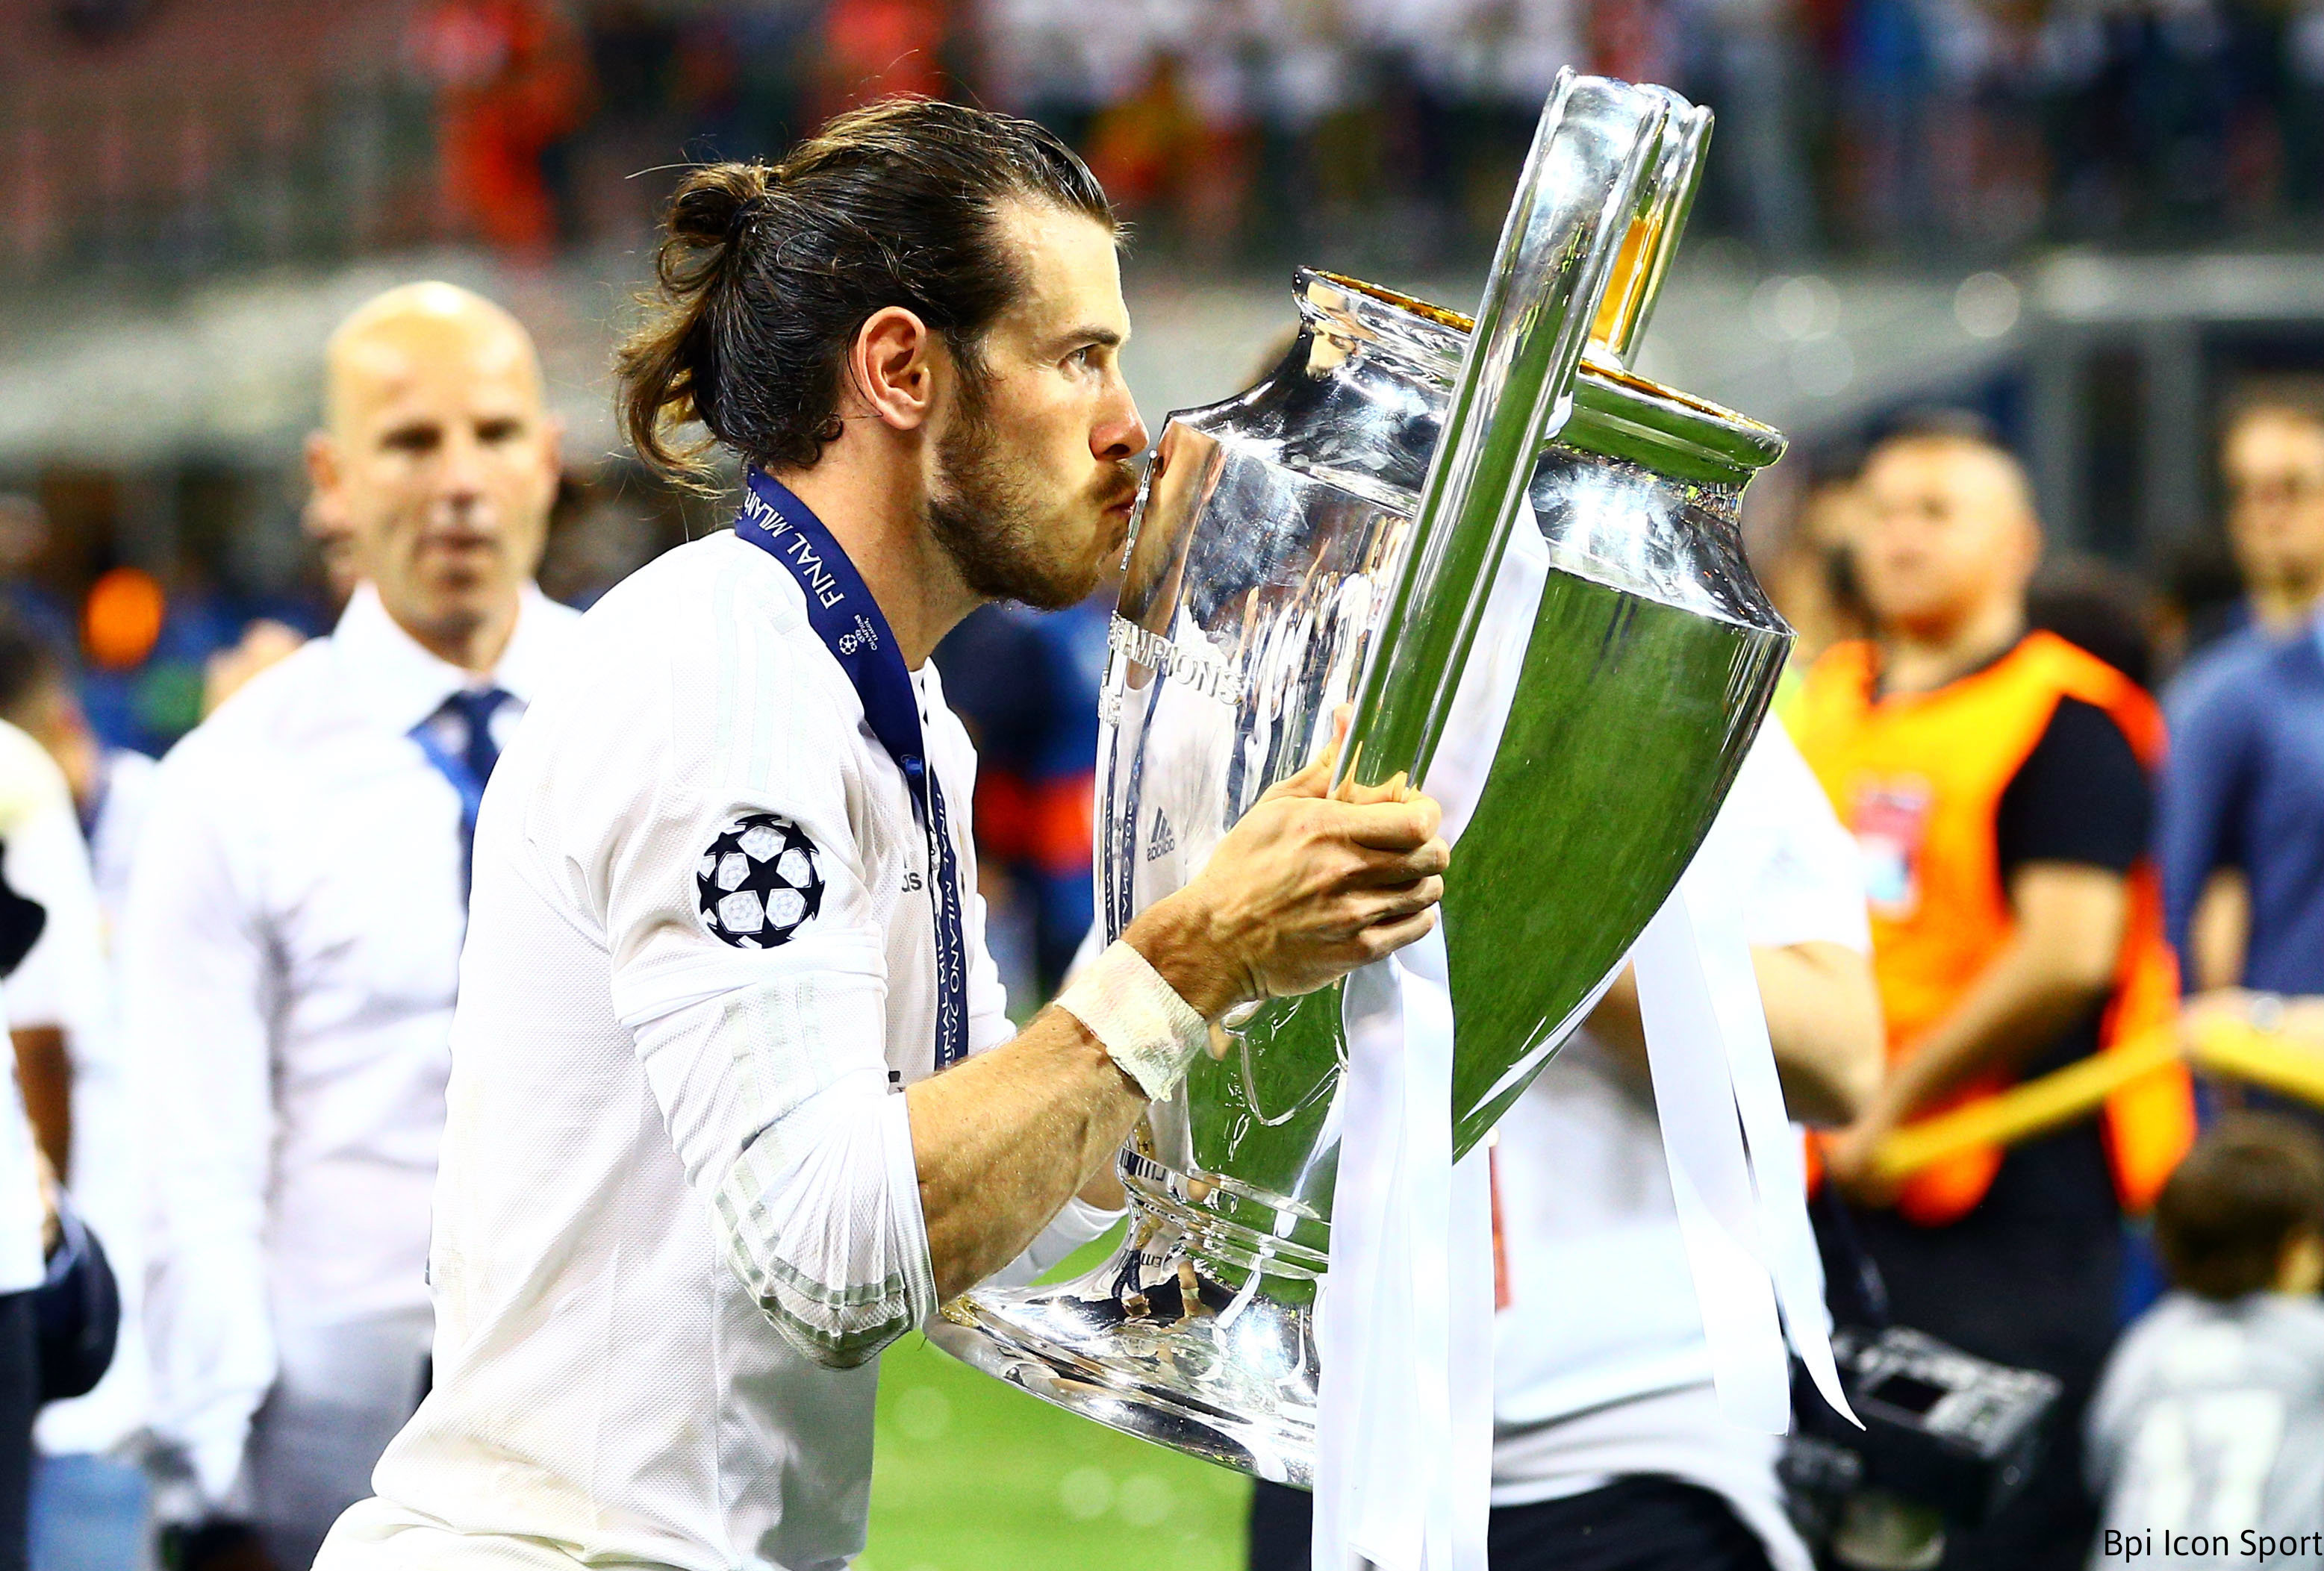 09-08-2016 - Real Madrid Credit Bpi  Icon Sport (2)